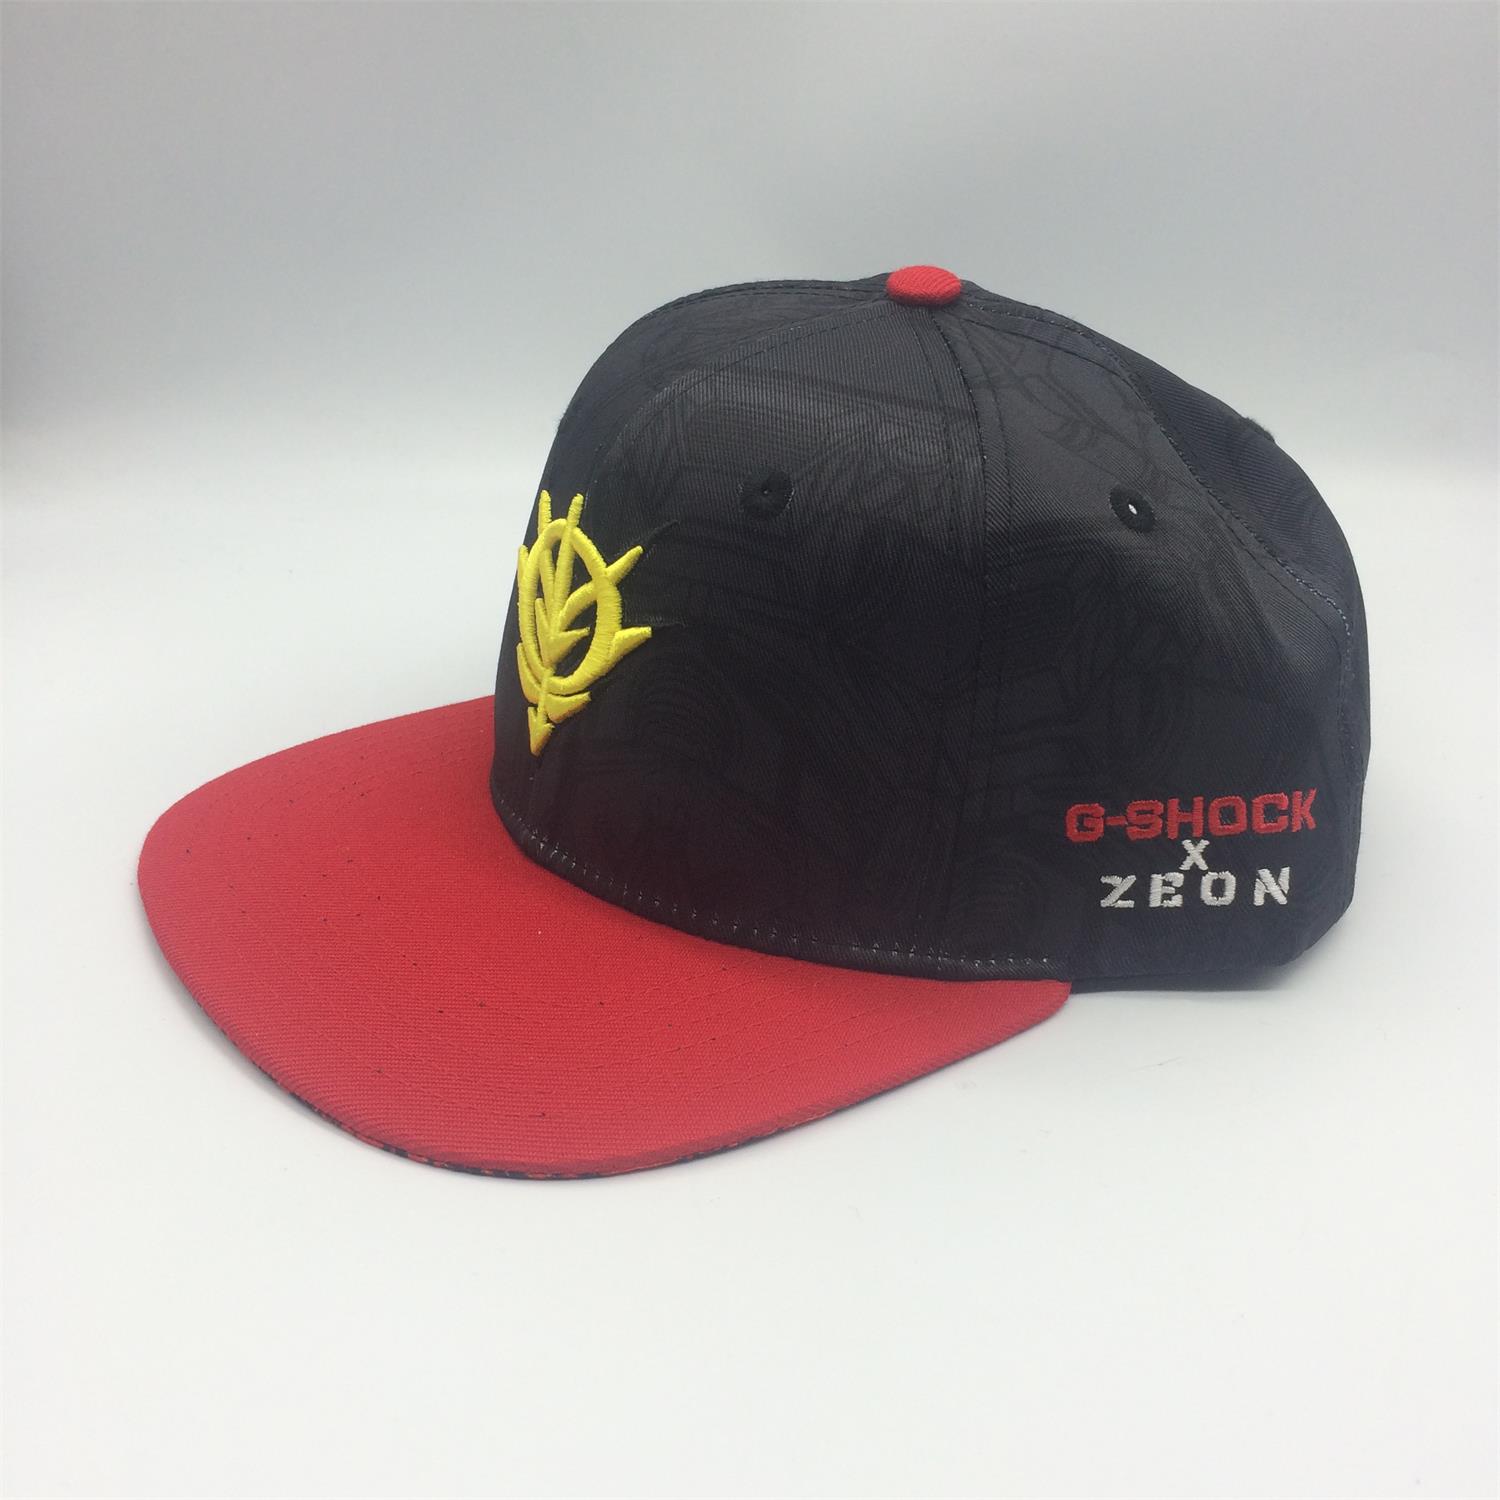 Professional OEM fashion 3d embroidery wholesale baseball cap hats and snapback cap custom logo